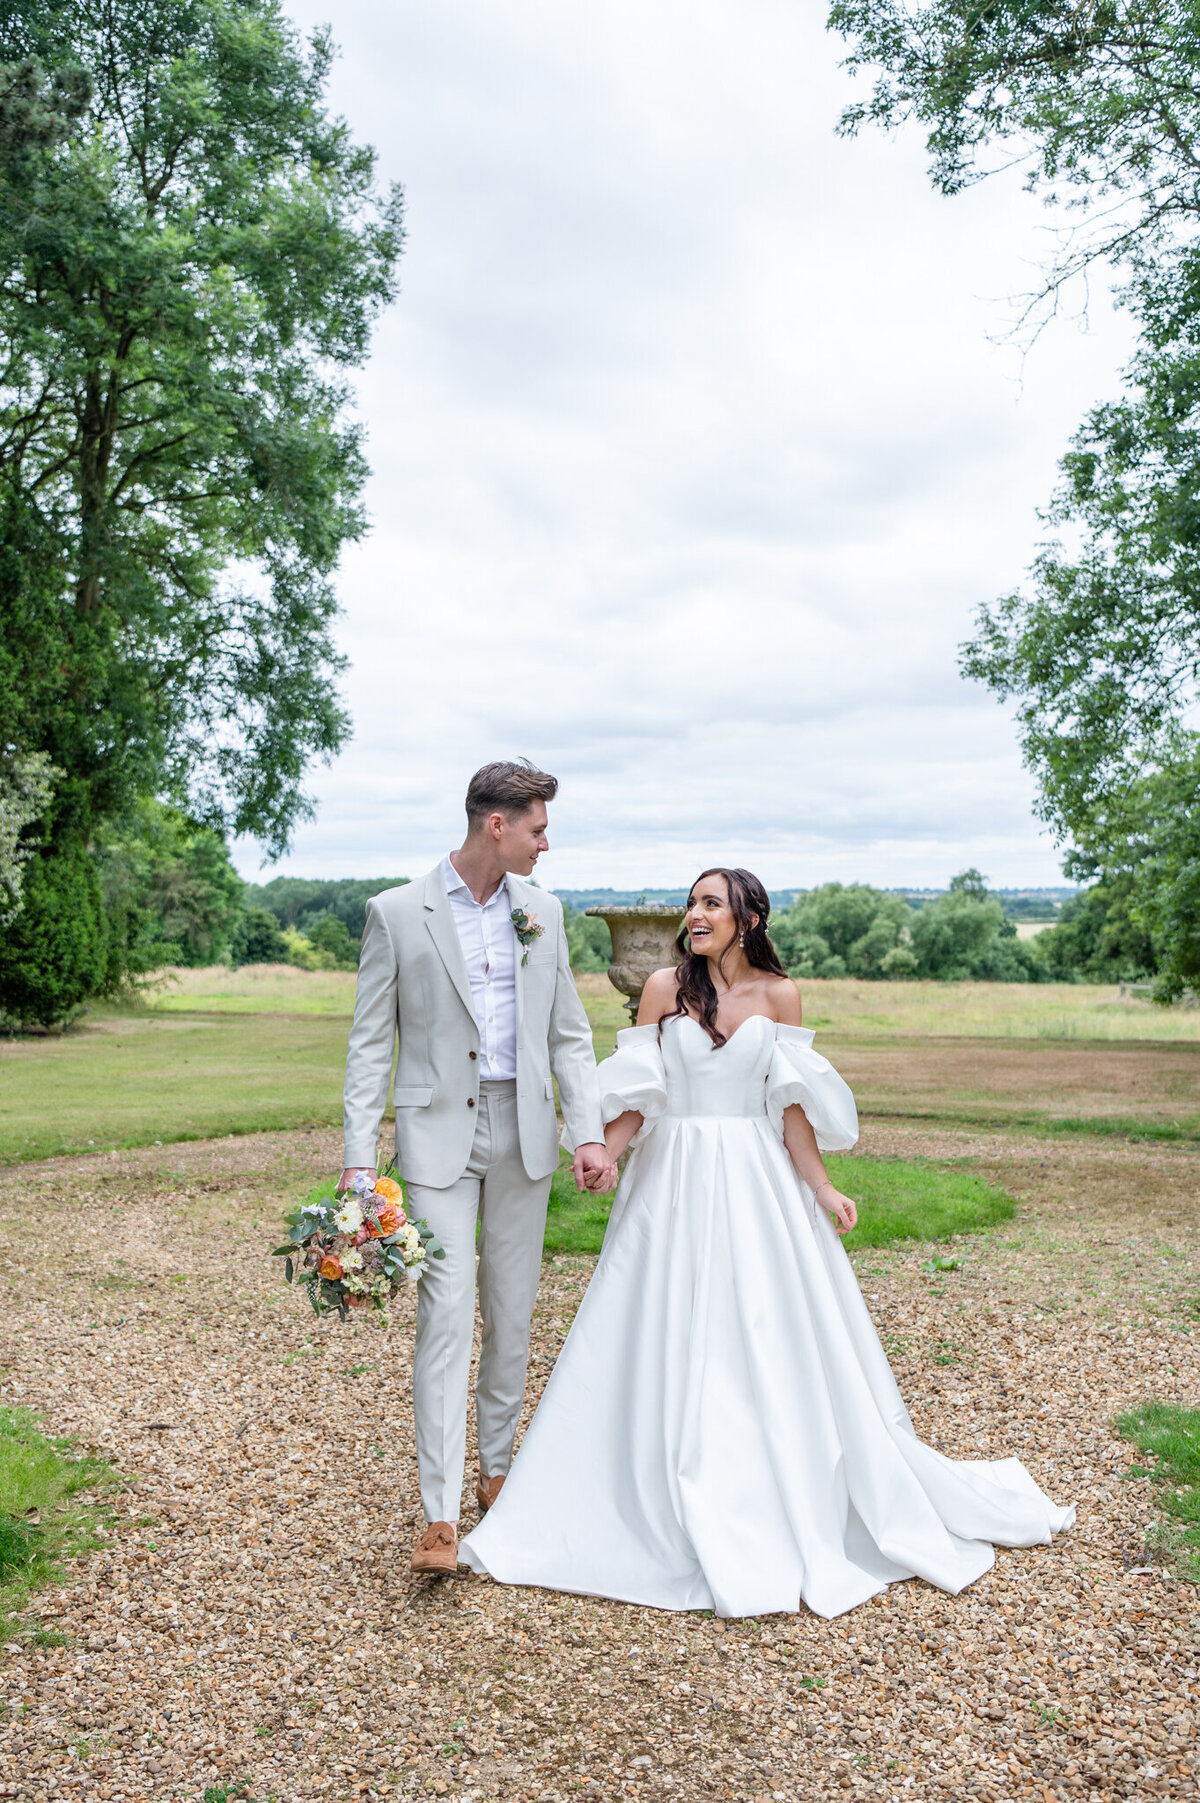 Chloe Bolam - UK Wedding and Engagment Photographer - Swanbourne House Wedding Venue Milton Keynes - Destination Wedding in the UK - 4